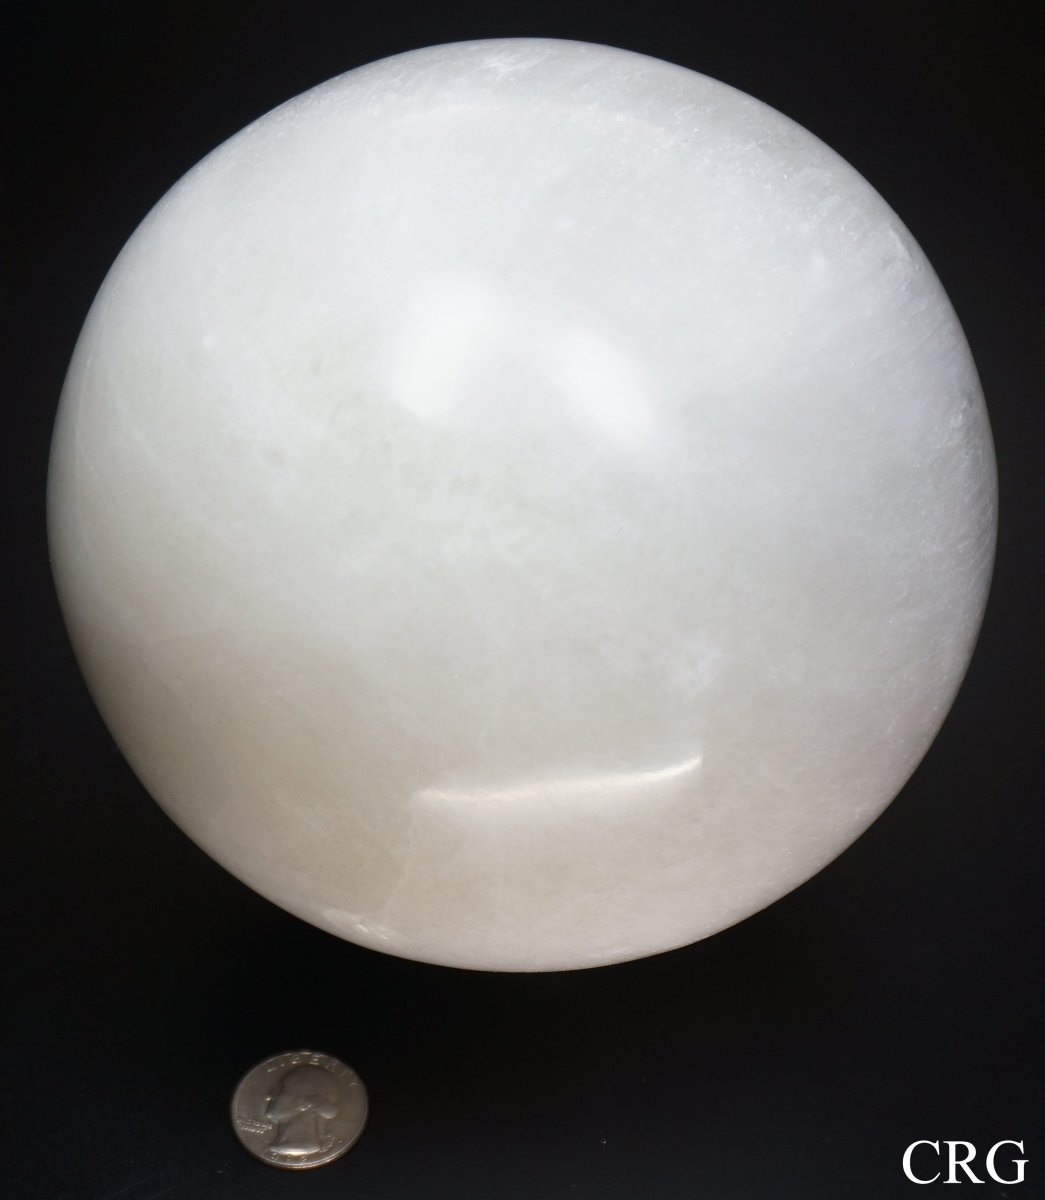 QTY 1 -- Extra Large Selenite Sphere / 5.5"-6" dia. AVG